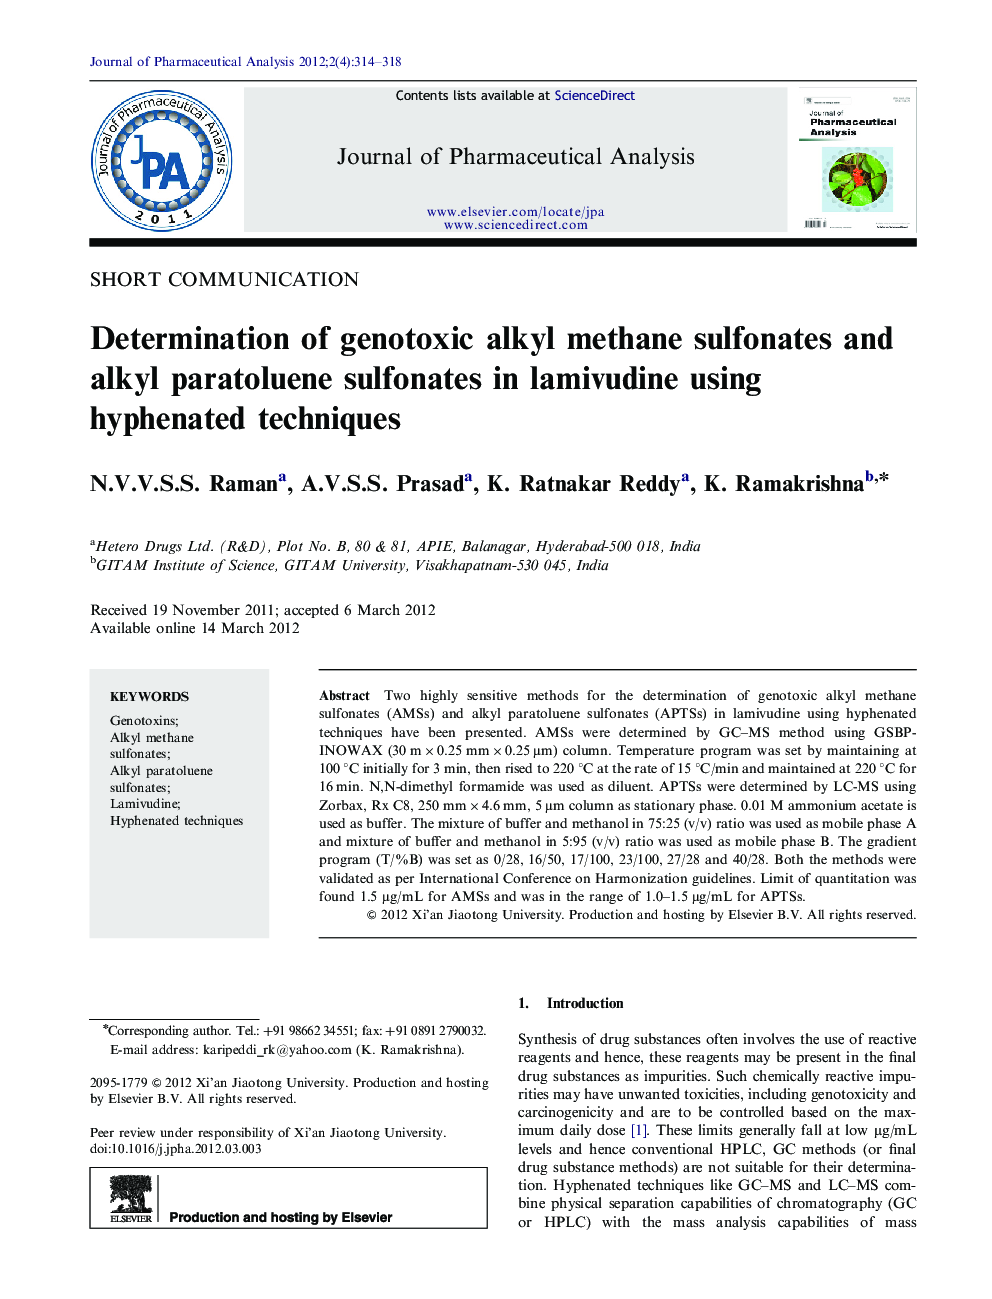 Determination of genotoxic alkyl methane sulfonates and alkyl paratoluene sulfonates in lamivudine using hyphenated techniques